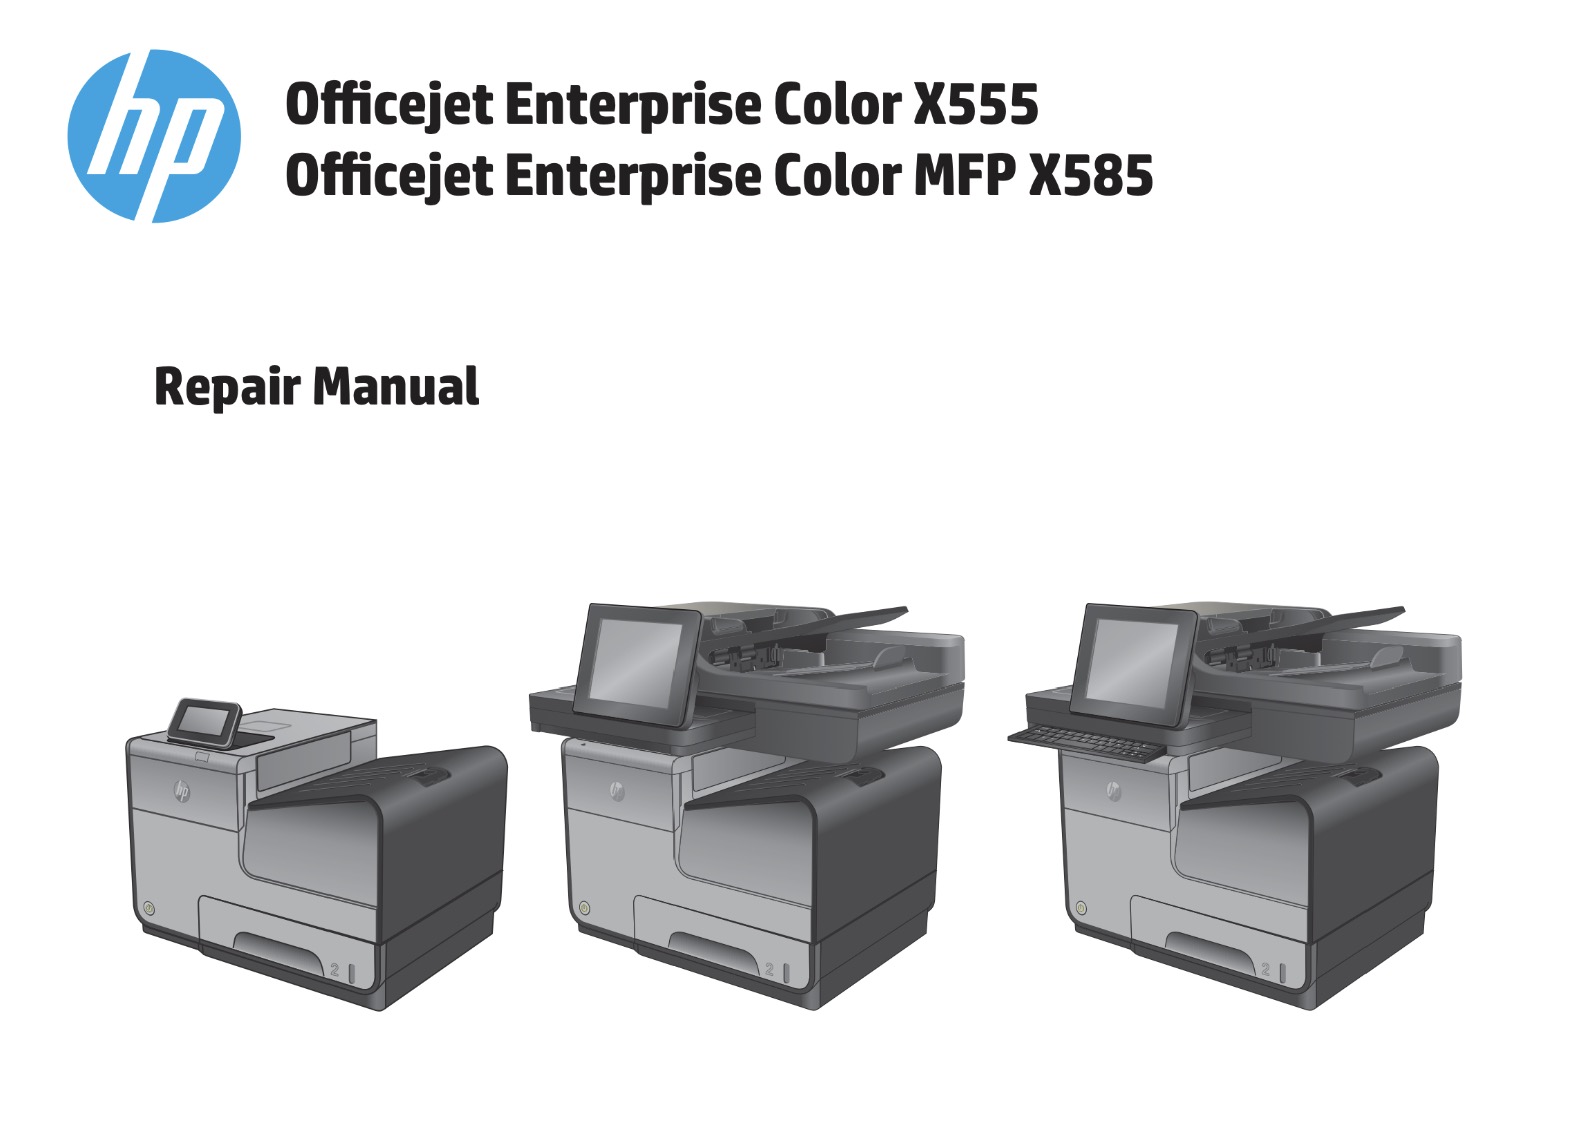 HP Officejet Enterprise Color X555 and MFP  X585 Series Repair Manual and Diagrams